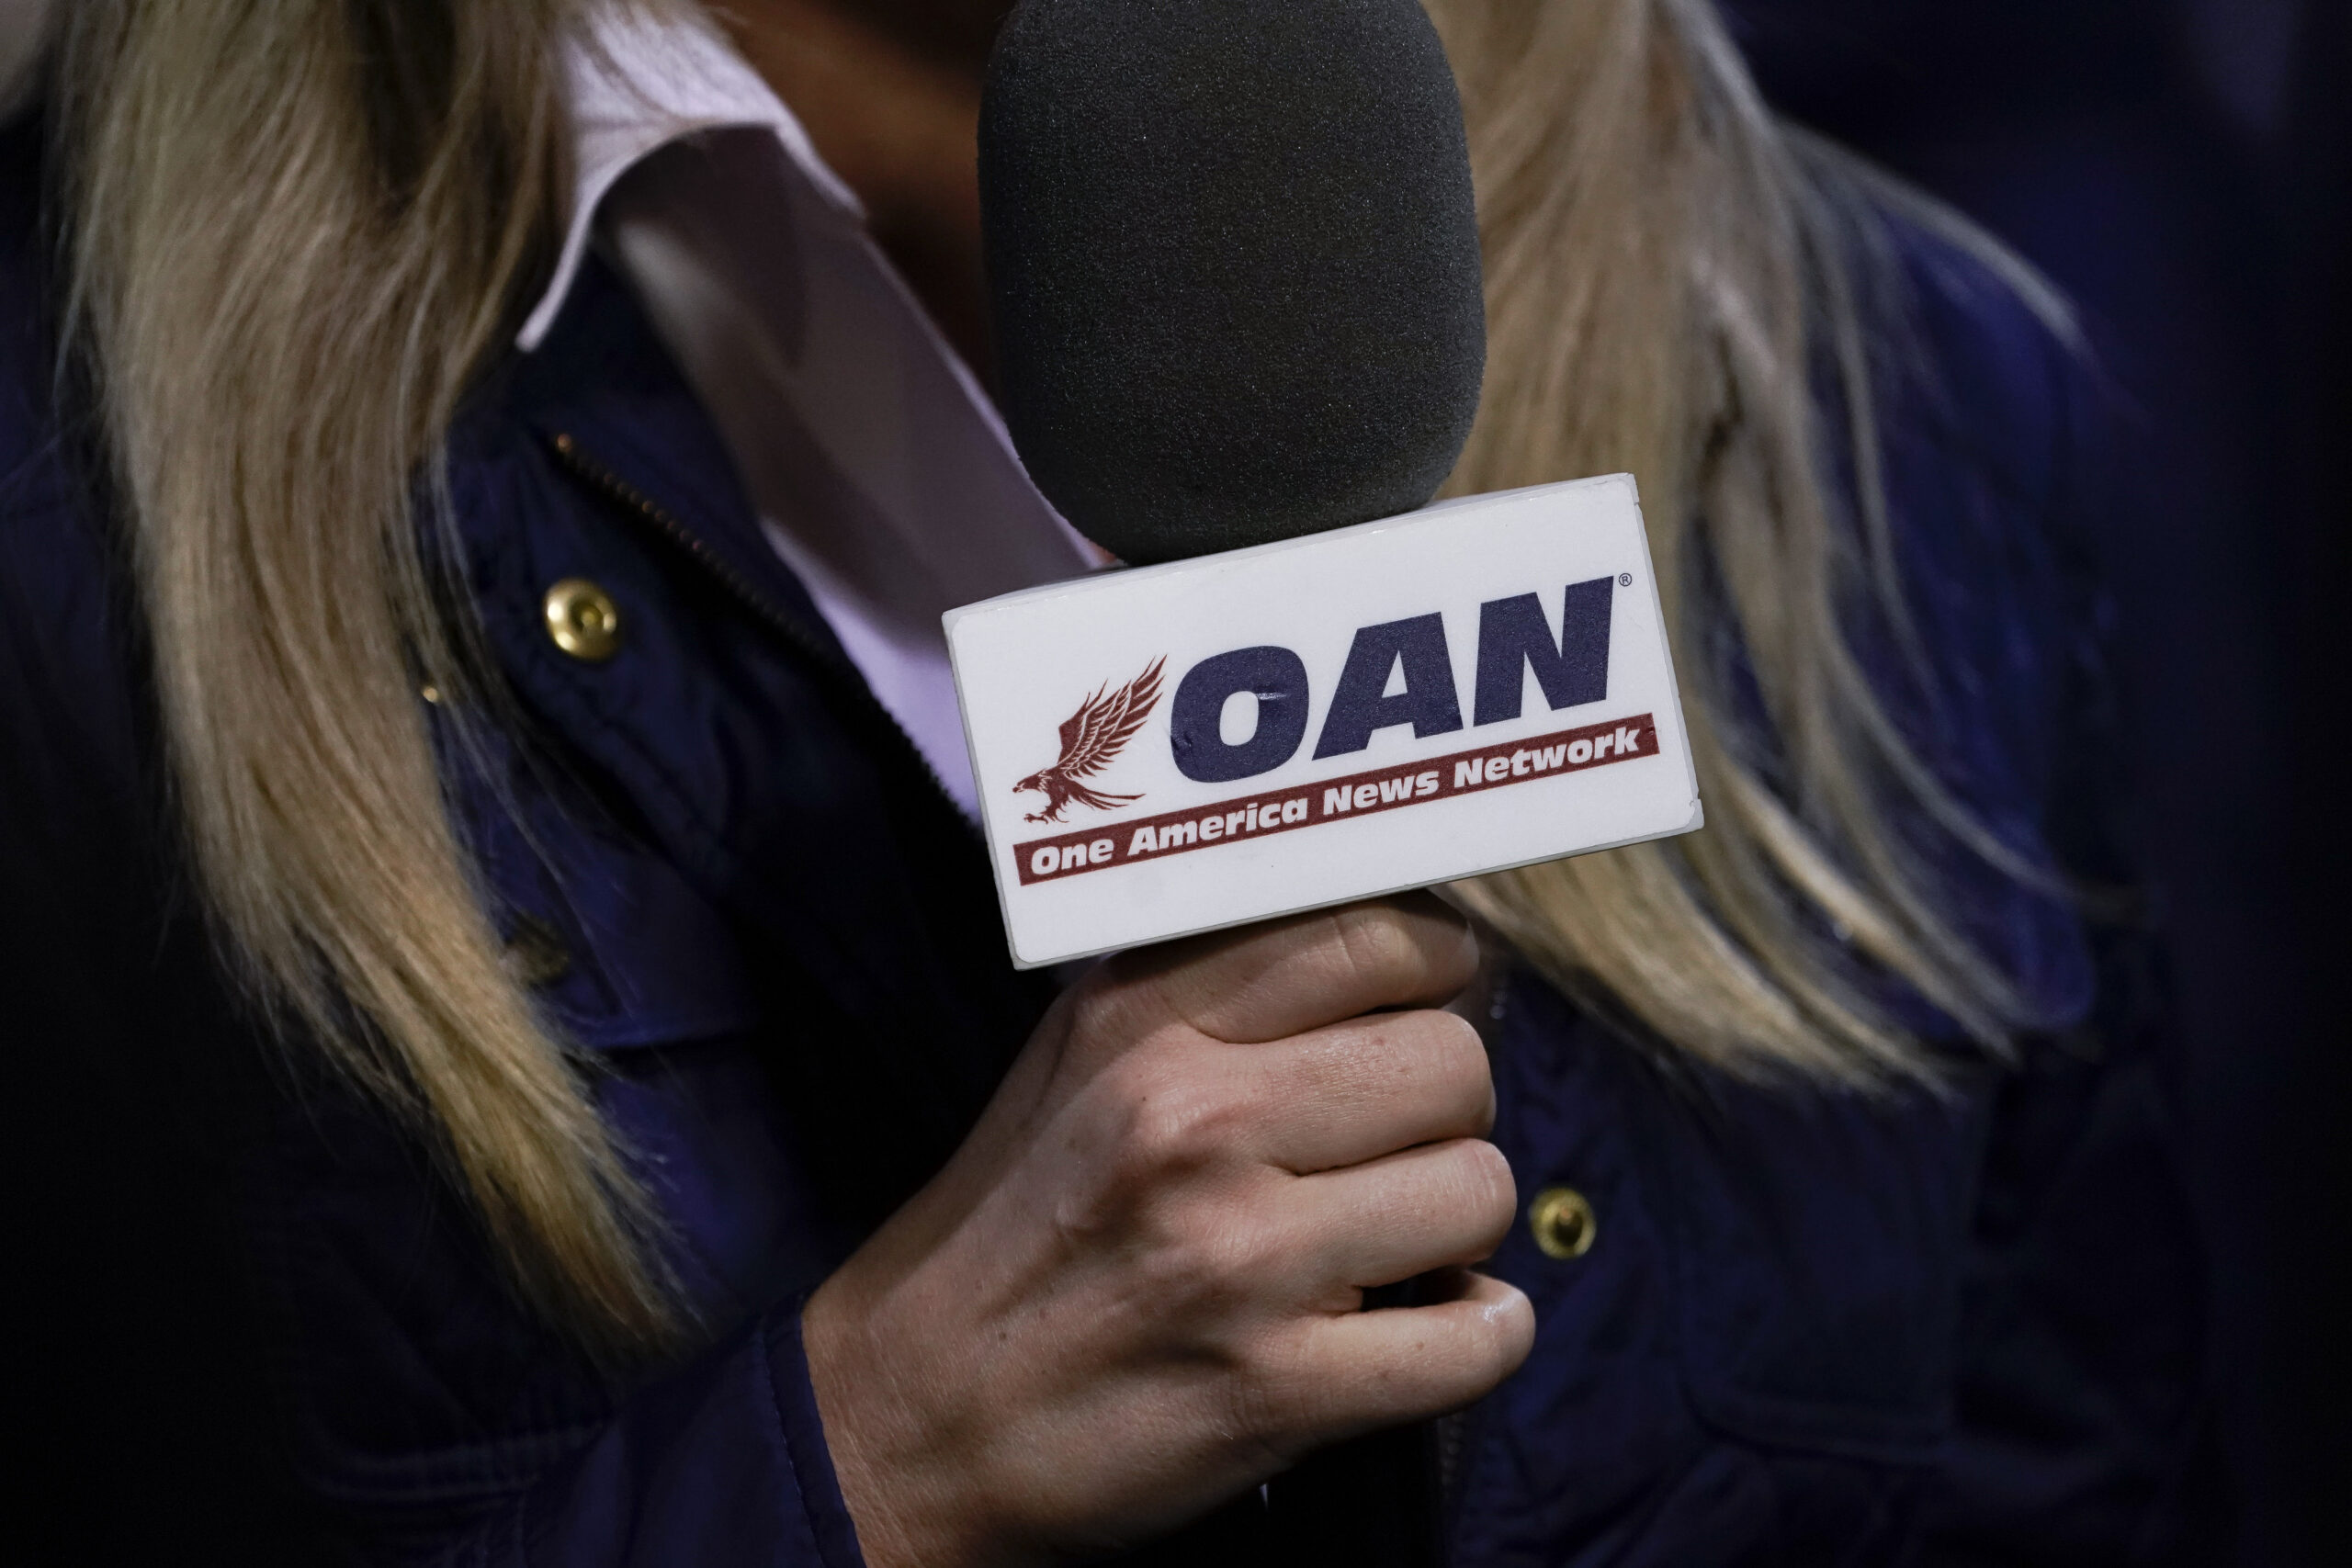 One America News Network reporter